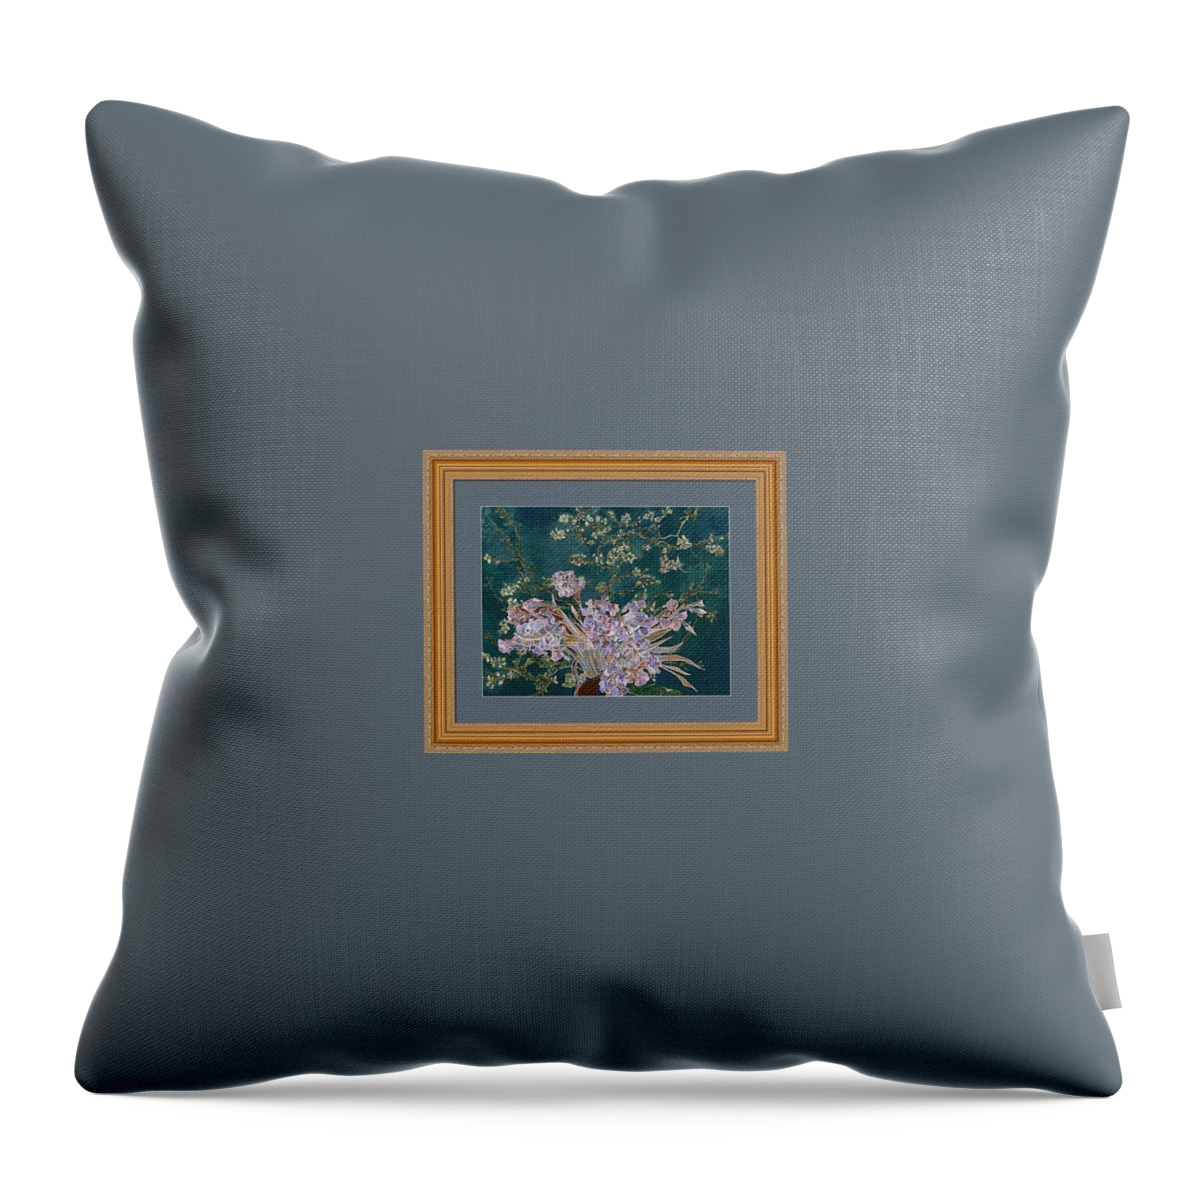  Throw Pillow featuring the digital art Beautiful Layered Collection by David Bridburg